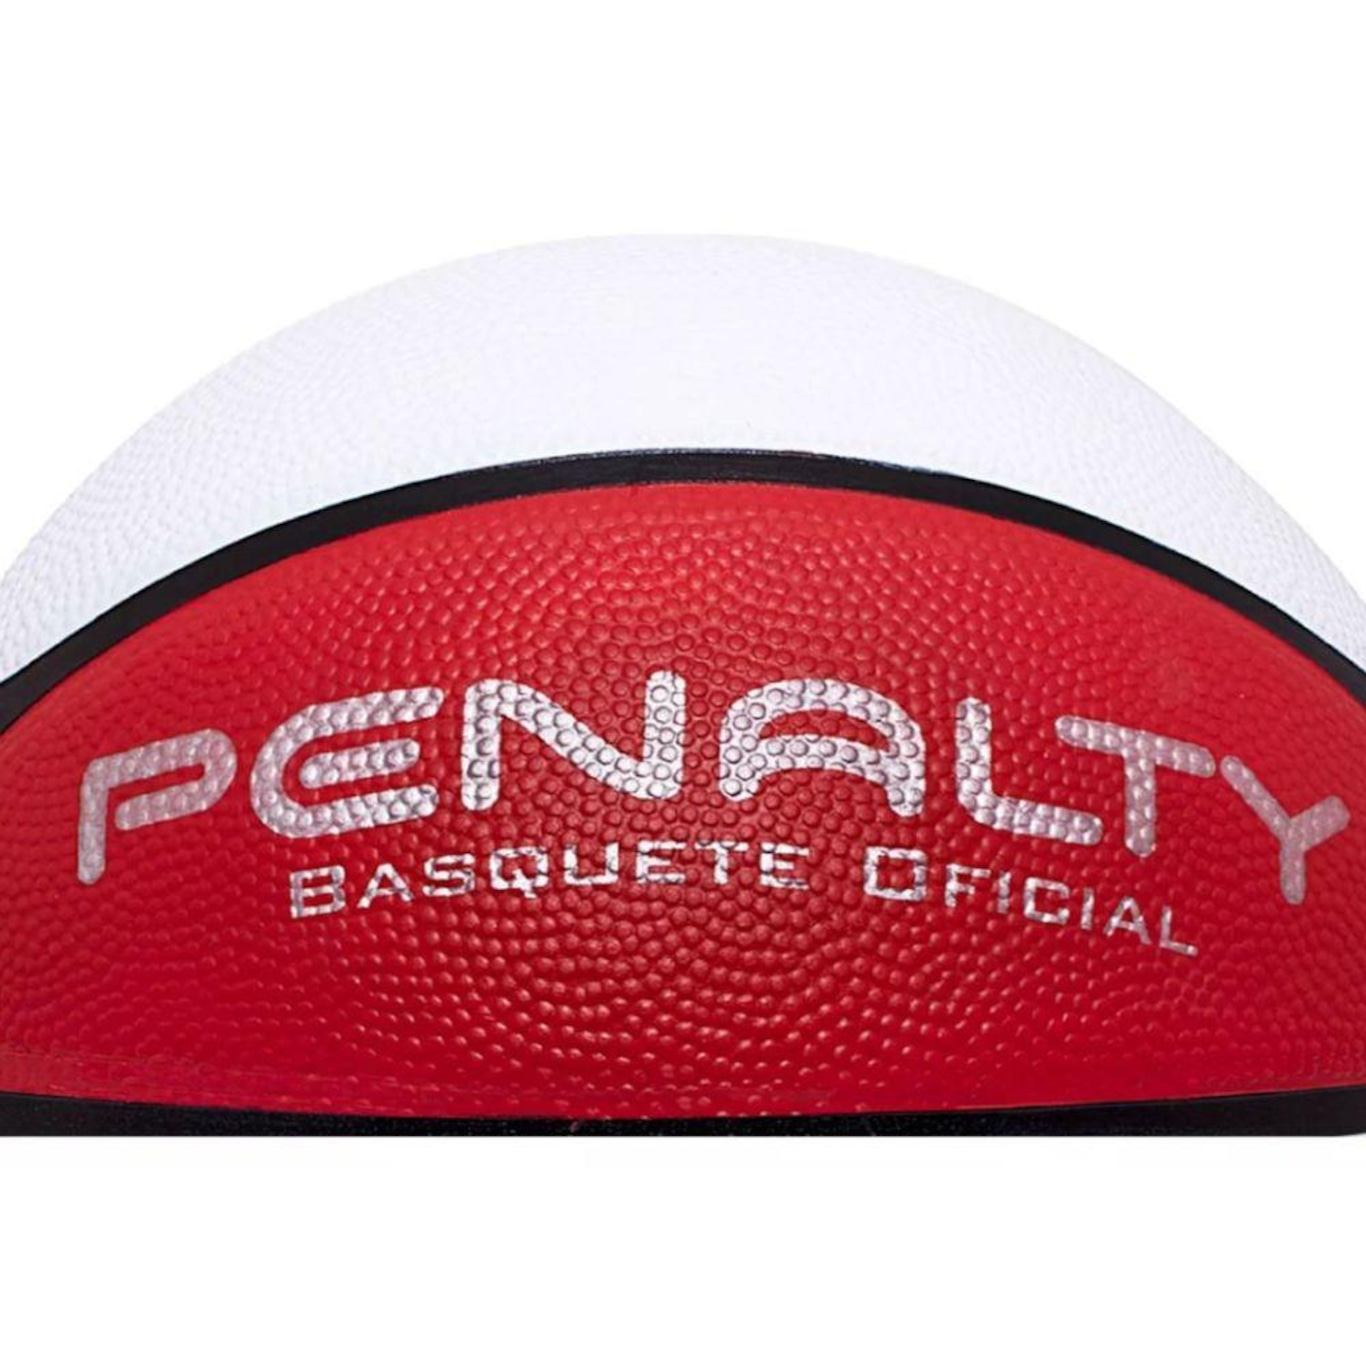 Bola Basquete Penalty Shoot X - Vermelho/Branco - Bola Basquete